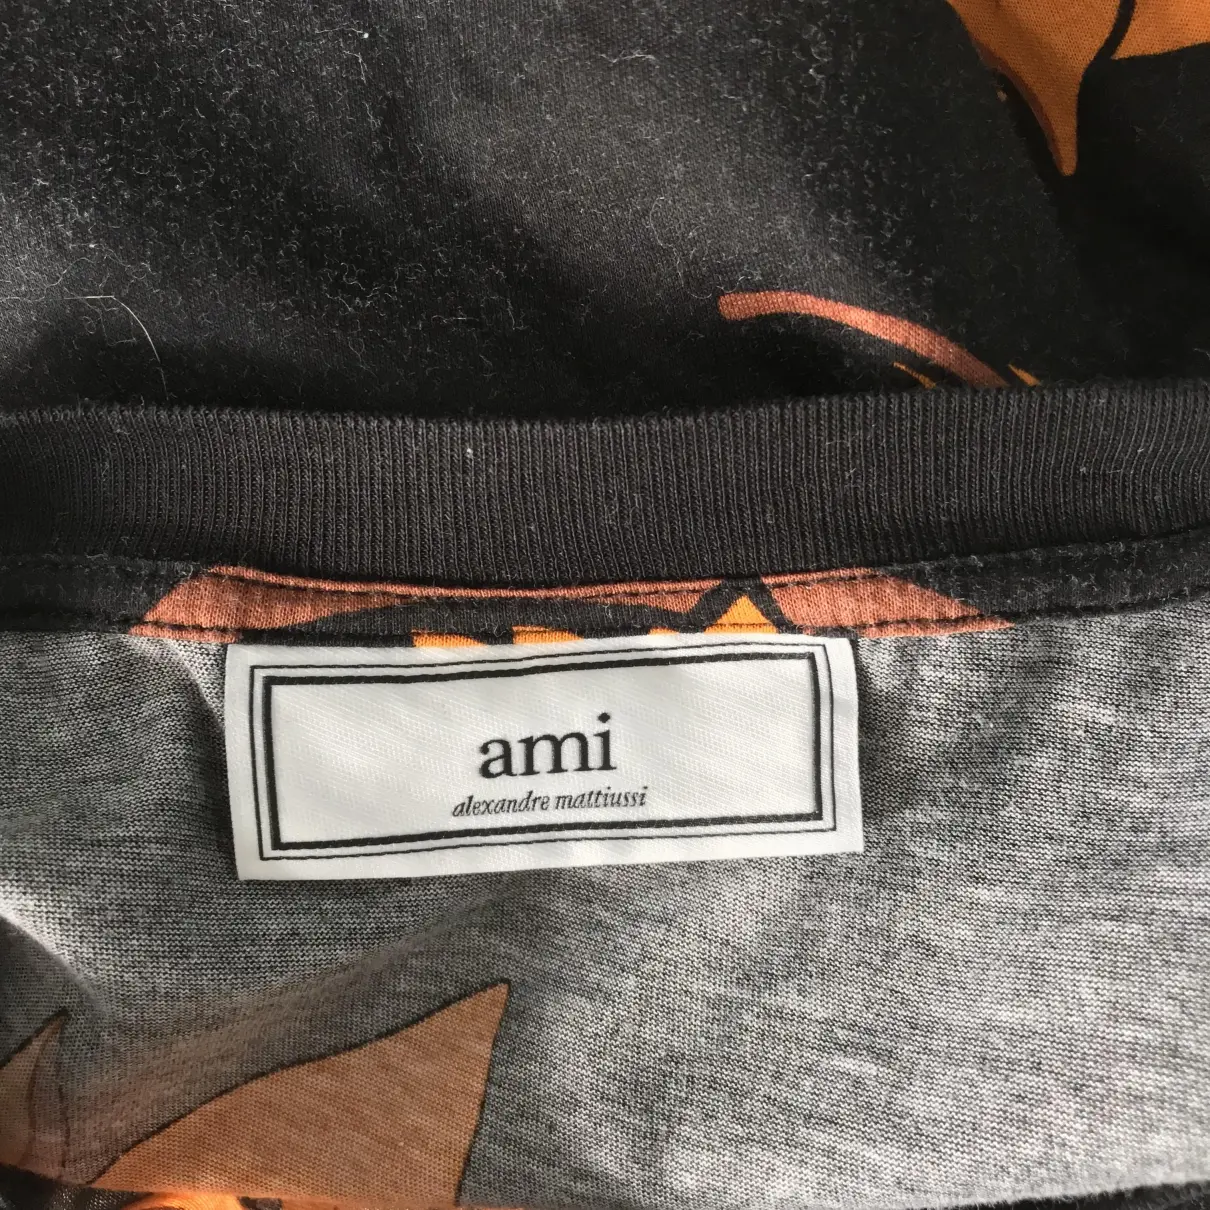 Buy Ami T-shirt online